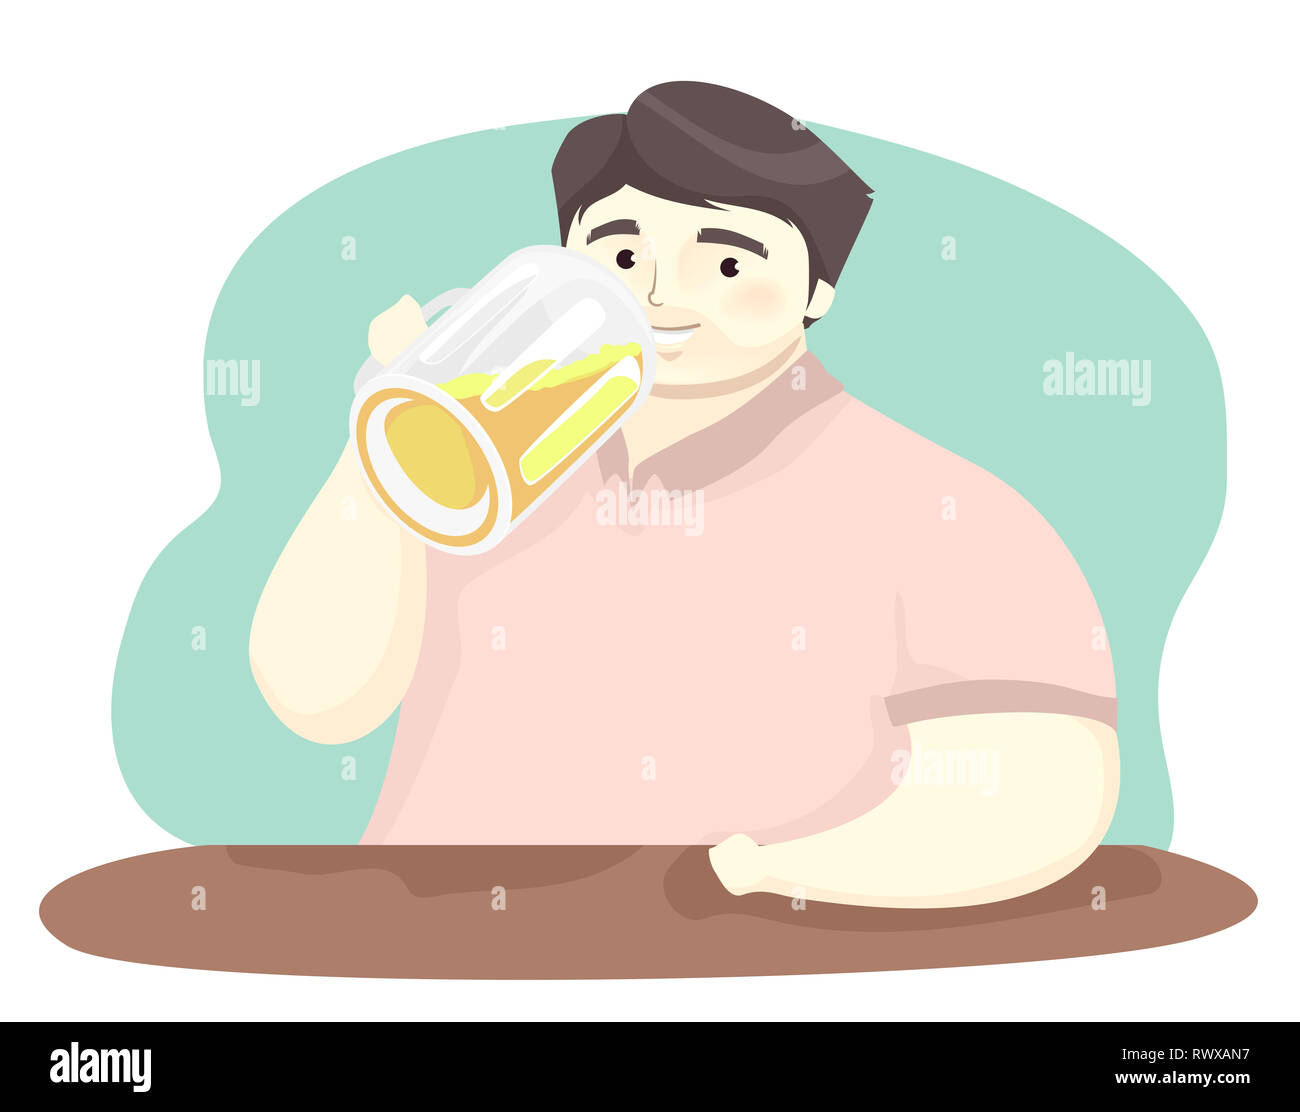 Illustration of a Fat Man Drinking a Big Mug of Beer Stock Photo